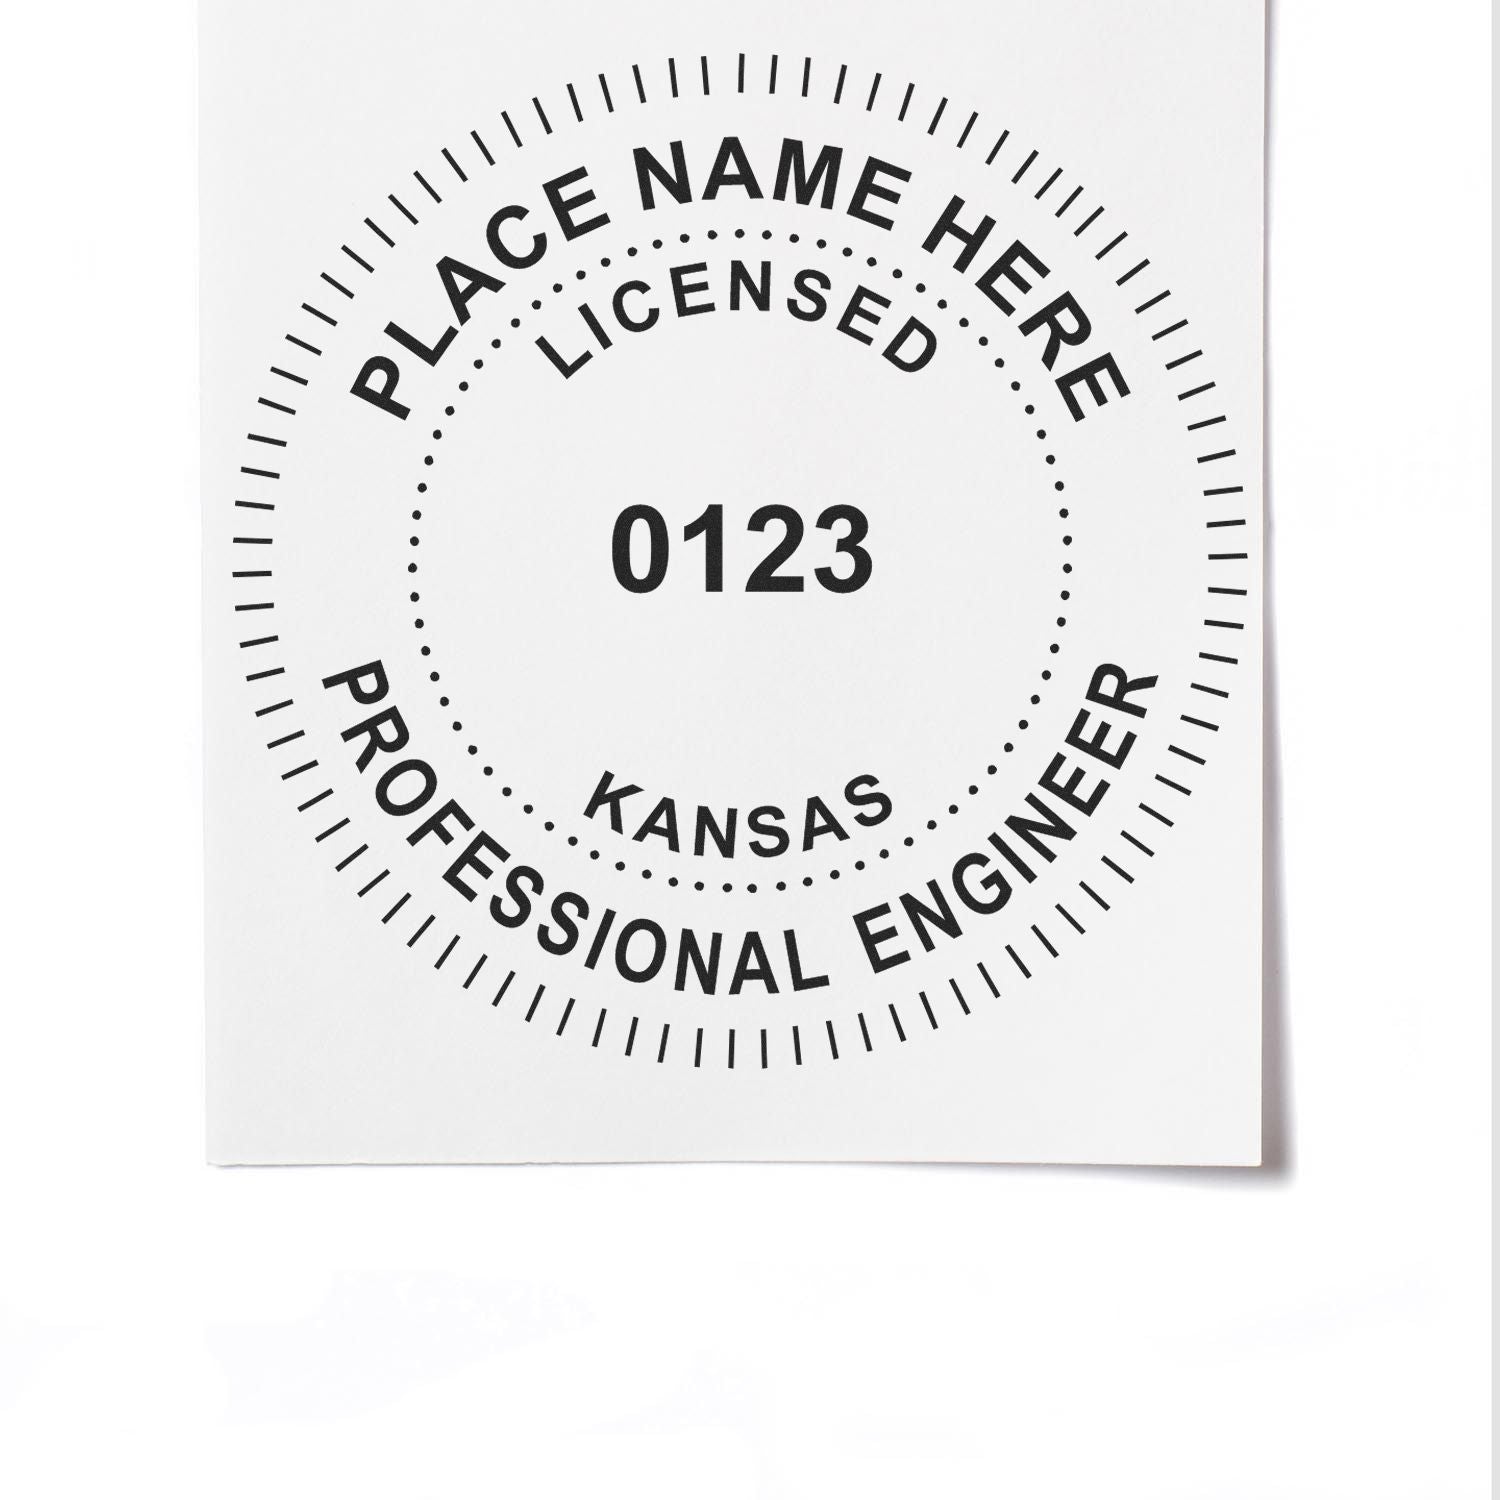 Streamline Your Success: The Efficient Kansas PE Stamp Application Process Feature Image